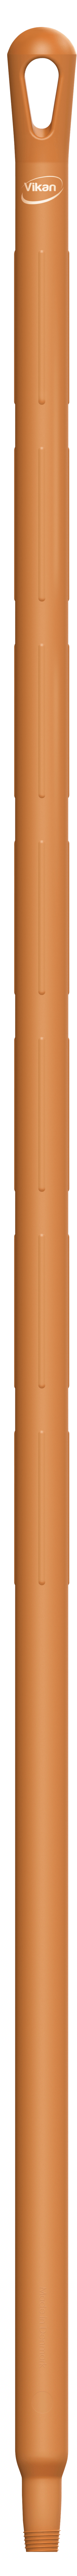 Vikan Ultra Hygiene Steel 1500mm 29627 oranje